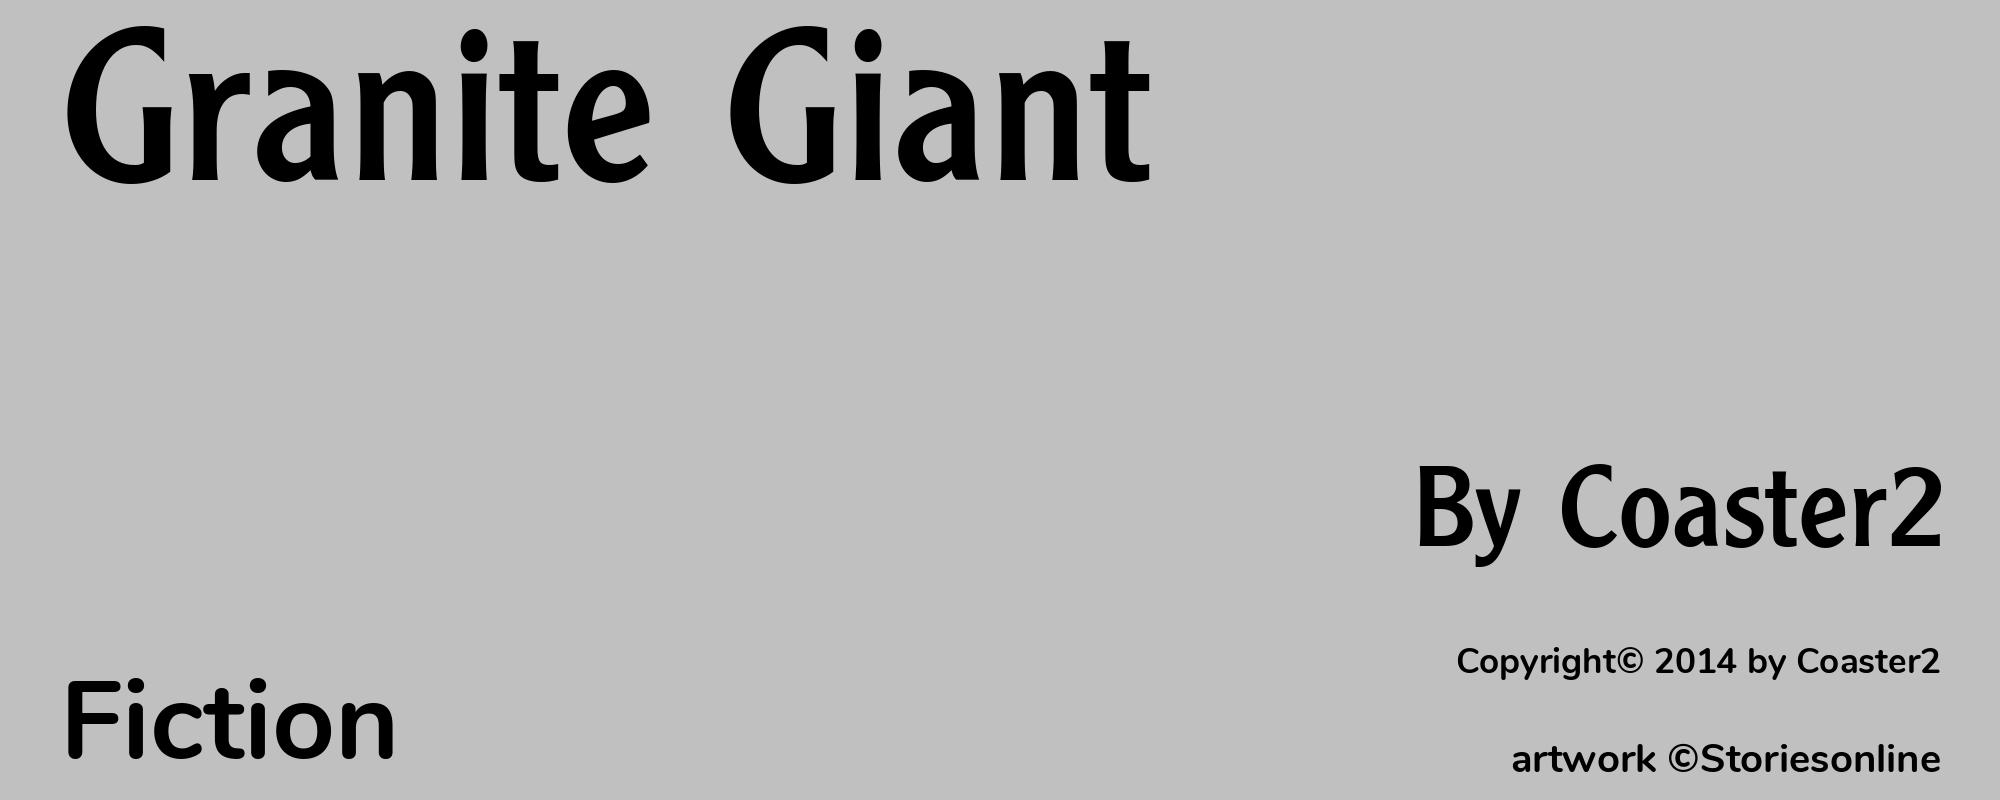 Granite Giant - Cover